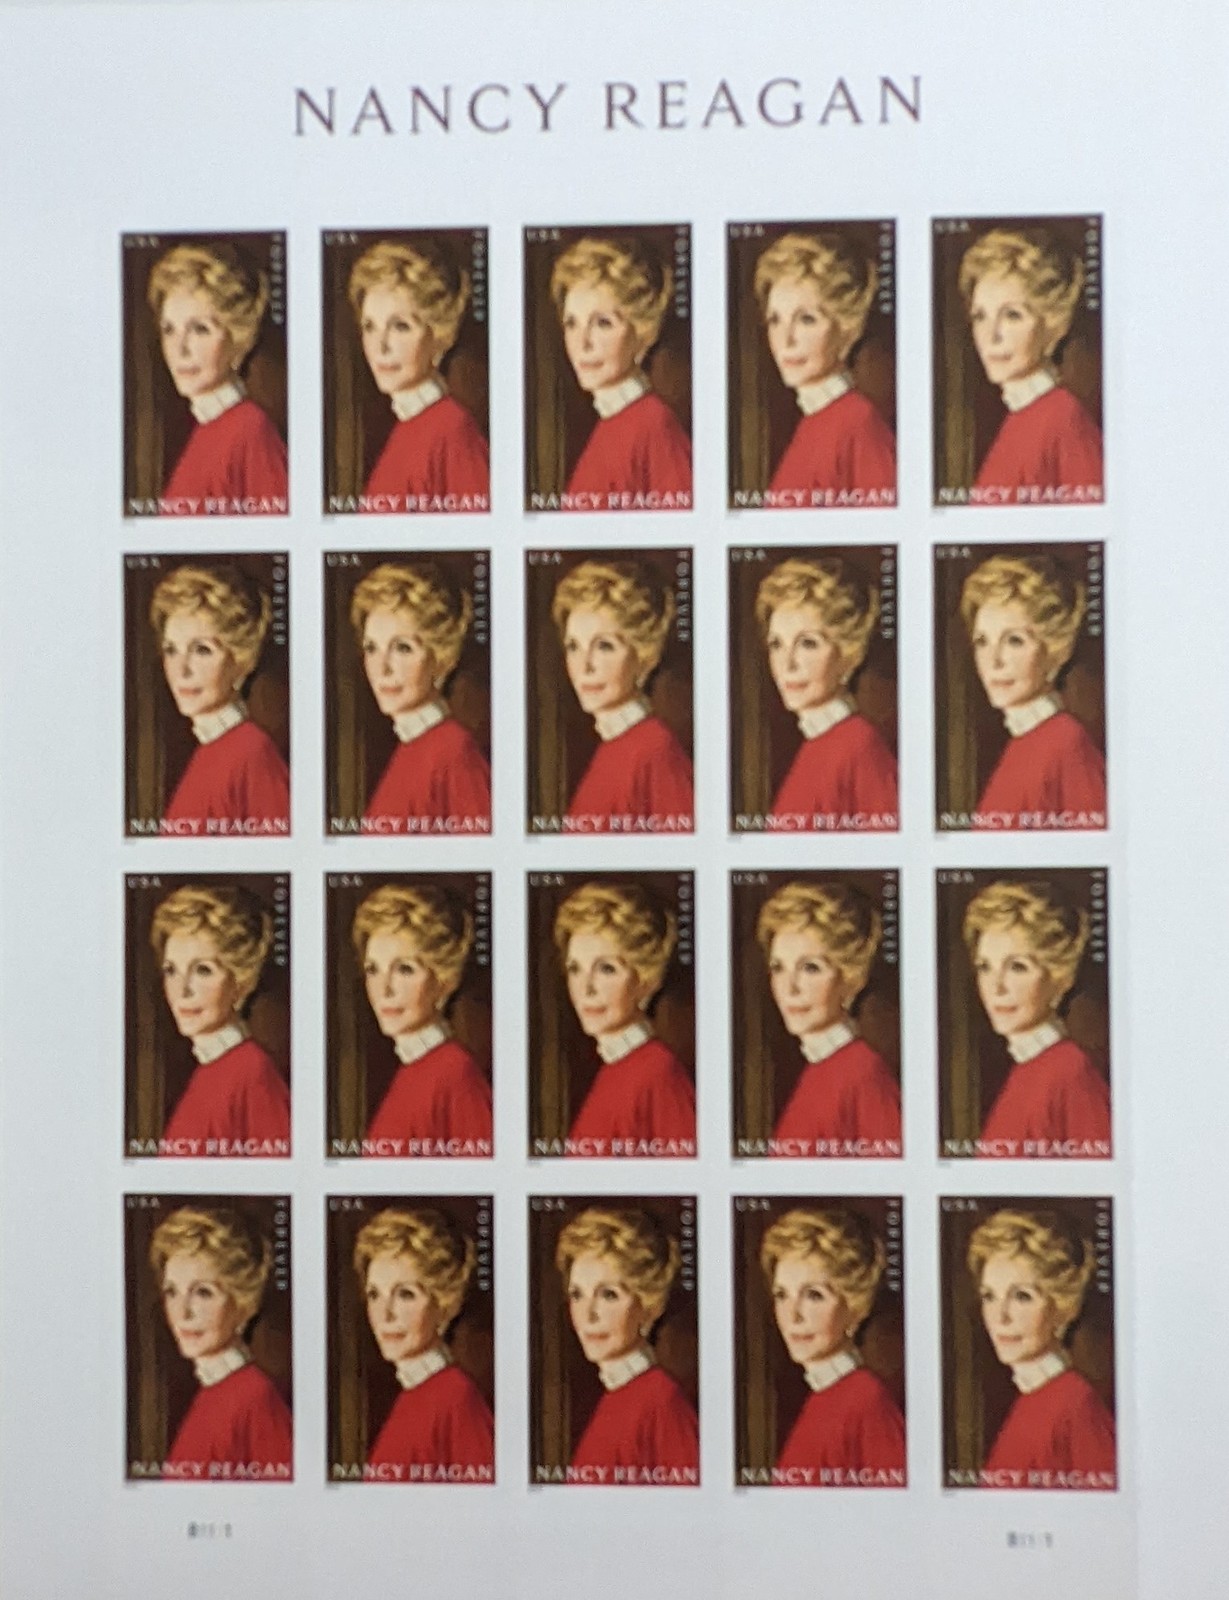 Primary image for Nancy Reagan USPS Forever Stamp Sheet 2022